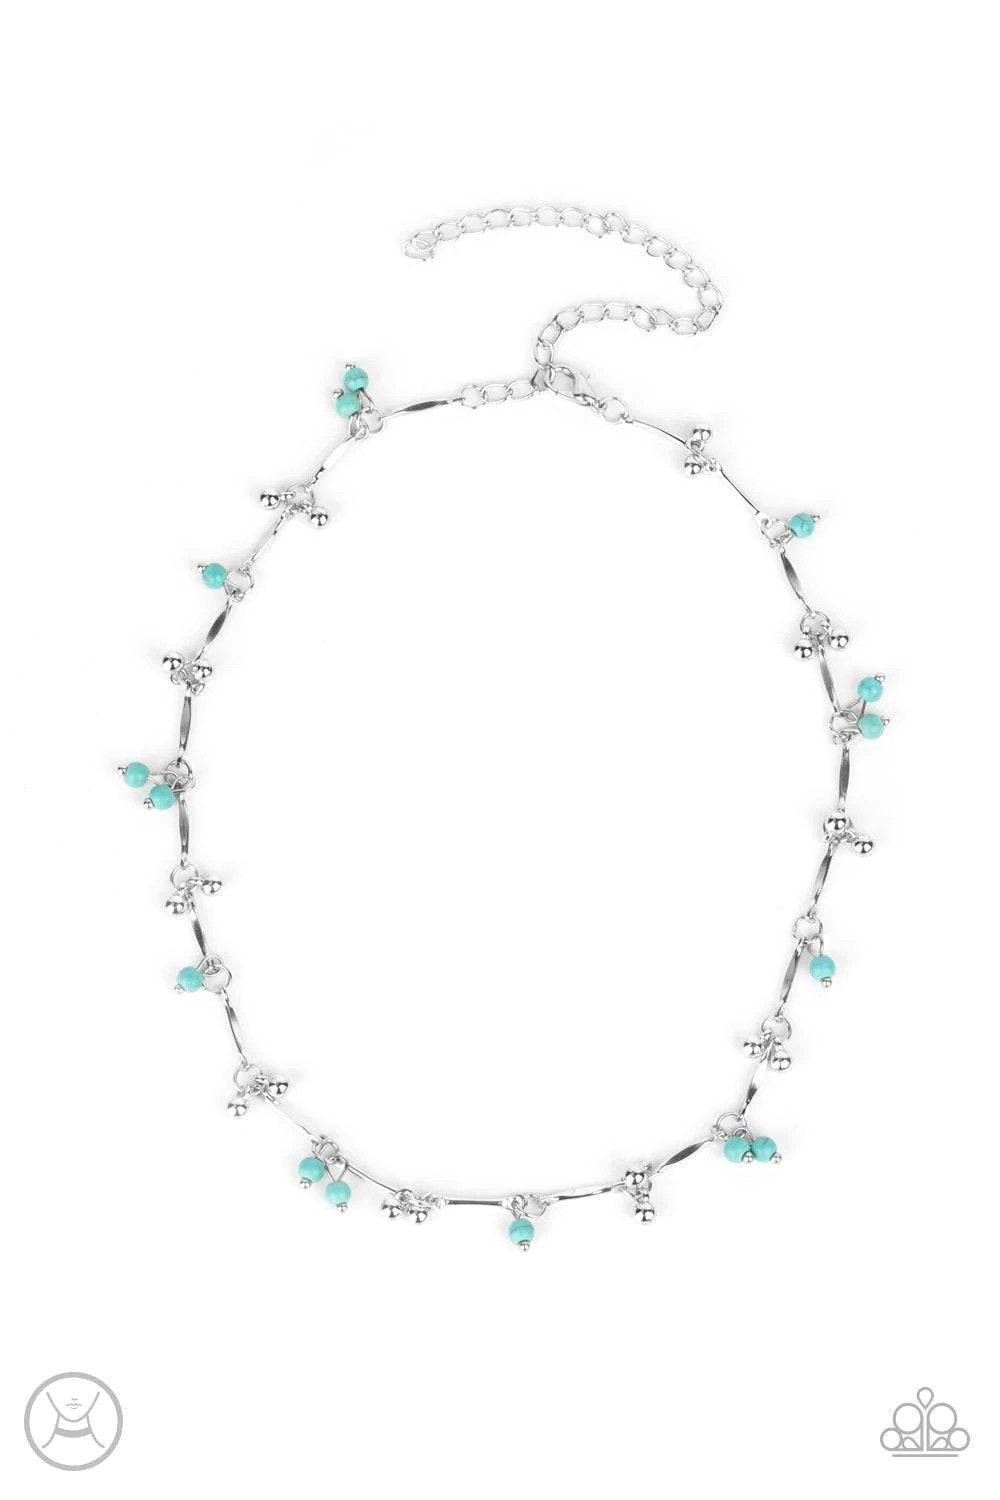 Sahara Social Blue Choker Necklace - Paparazzi Accessories- lightbox - CarasShop.com - $5 Jewelry by Cara Jewels